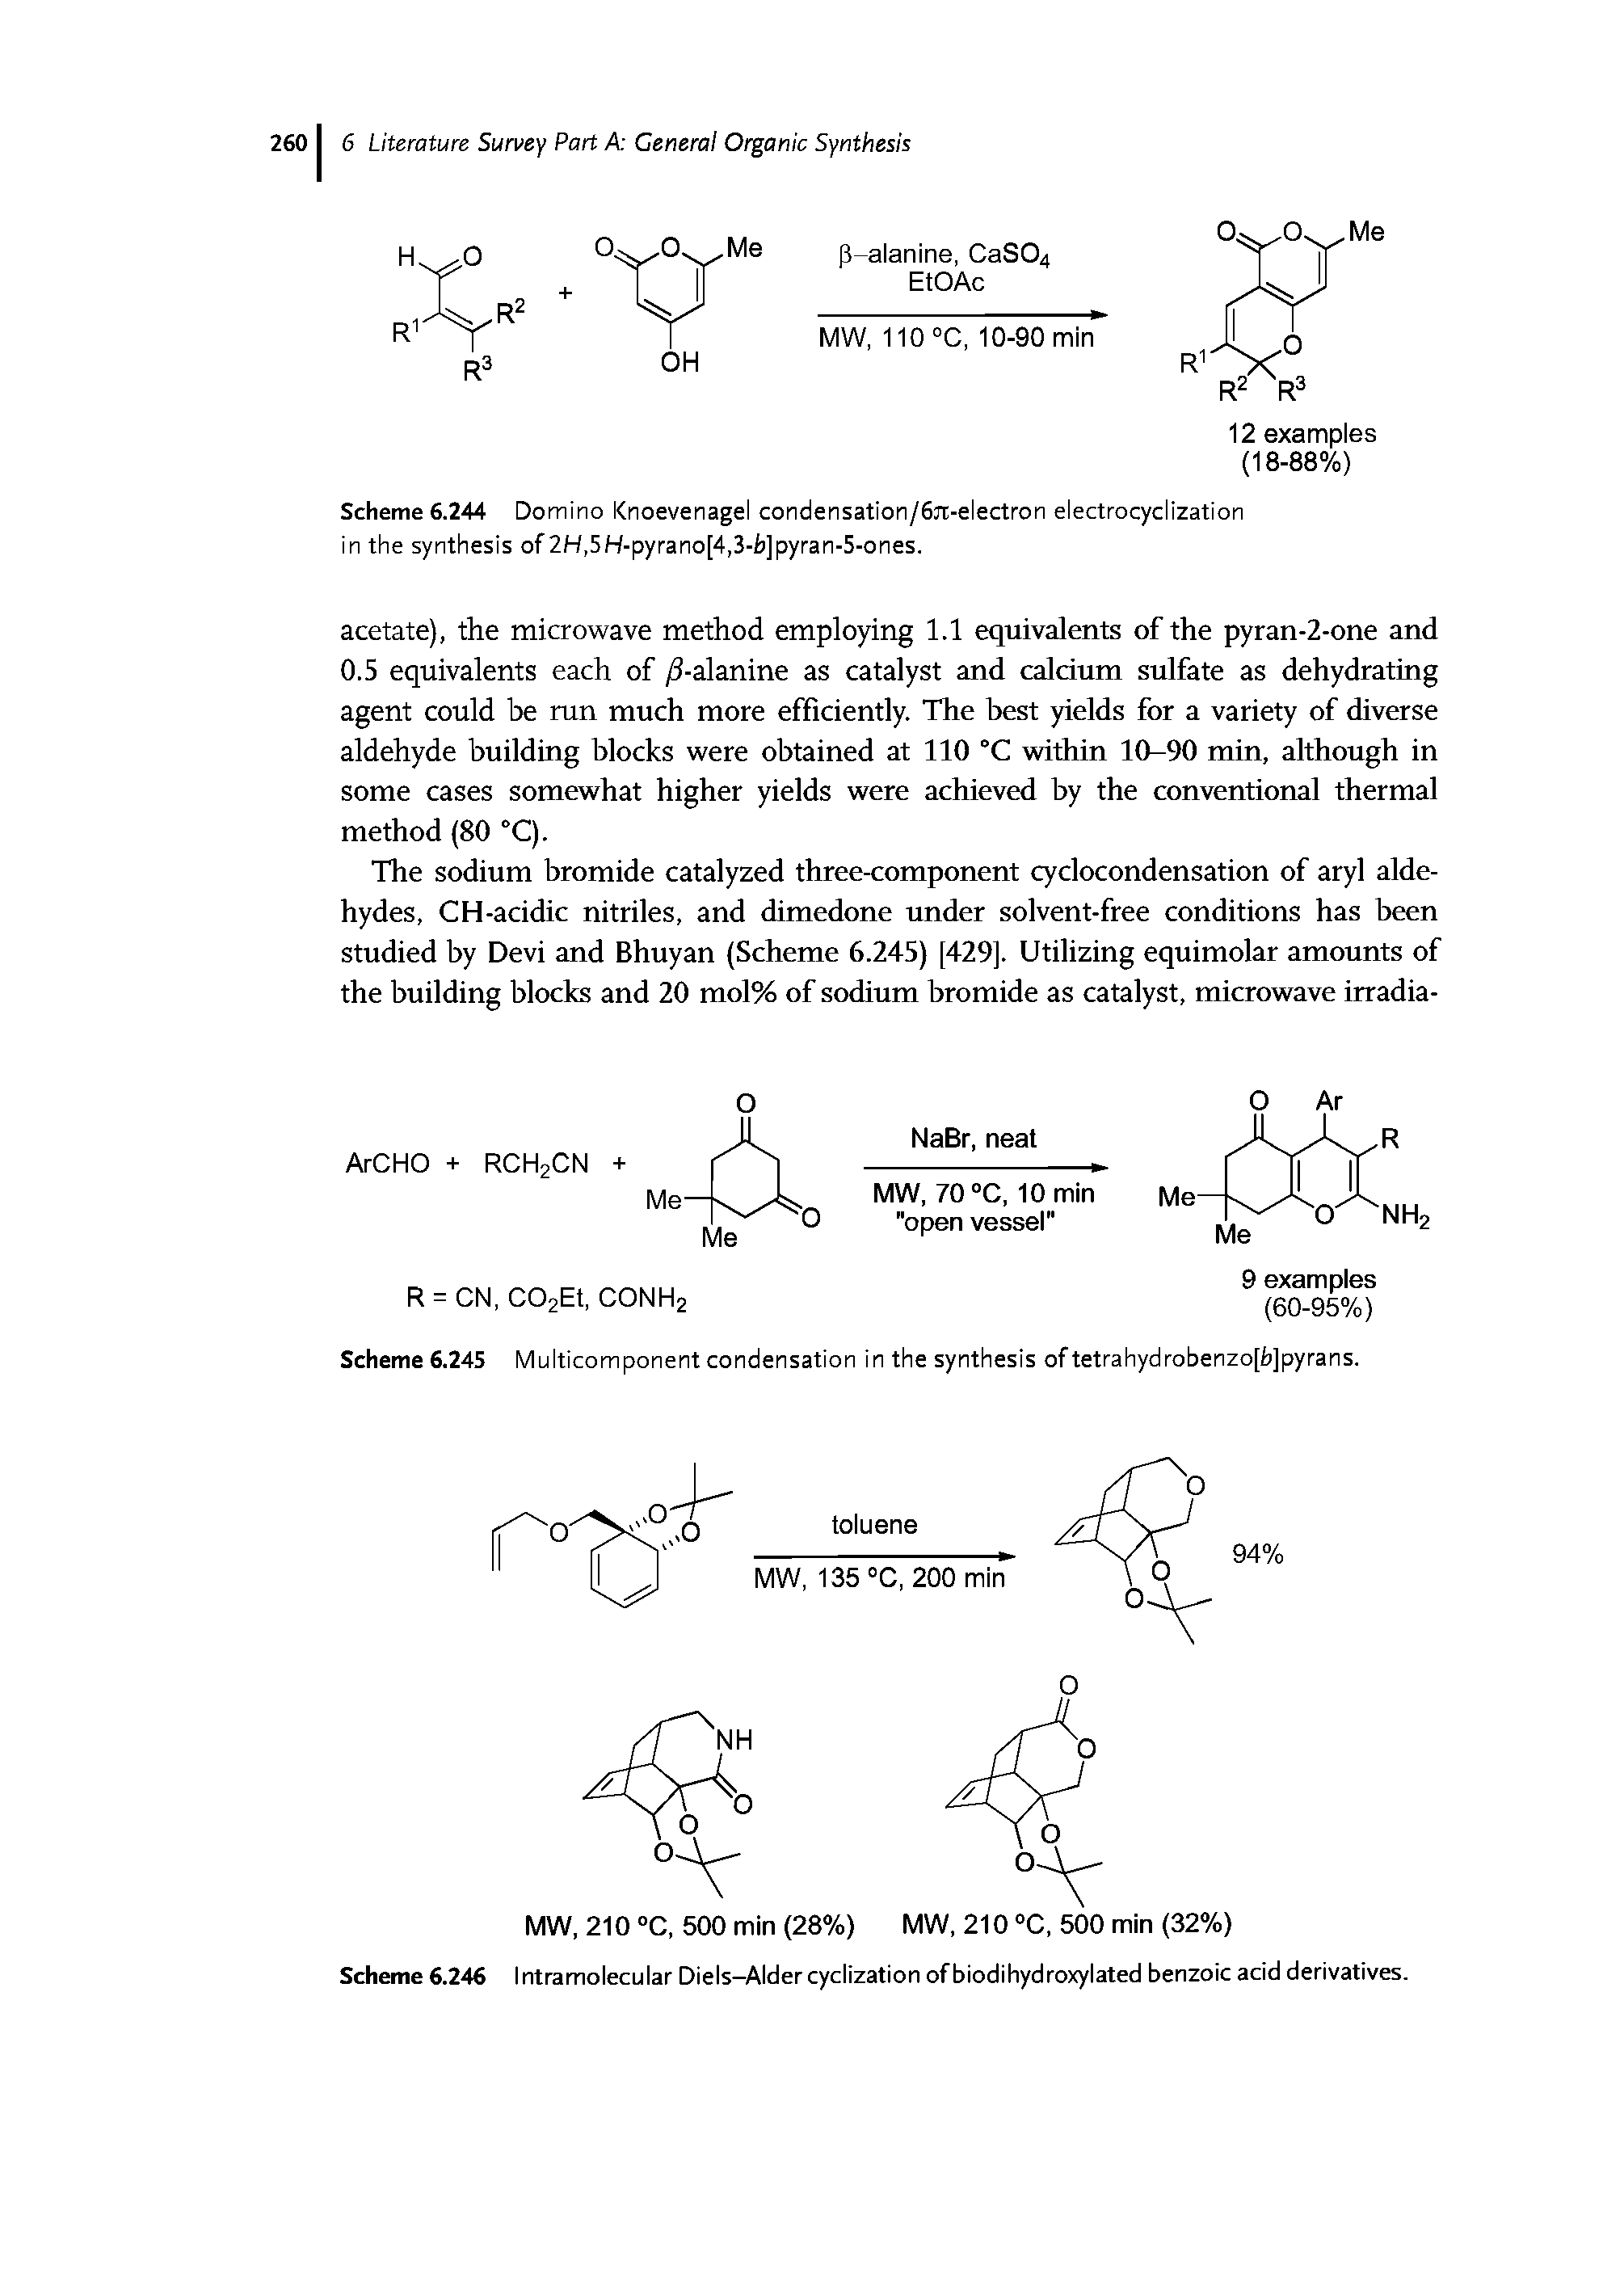 Scheme 6.246 Intramolecular Diels—Alder cyclization of biodihydroxylated benzoic acid derivatives.